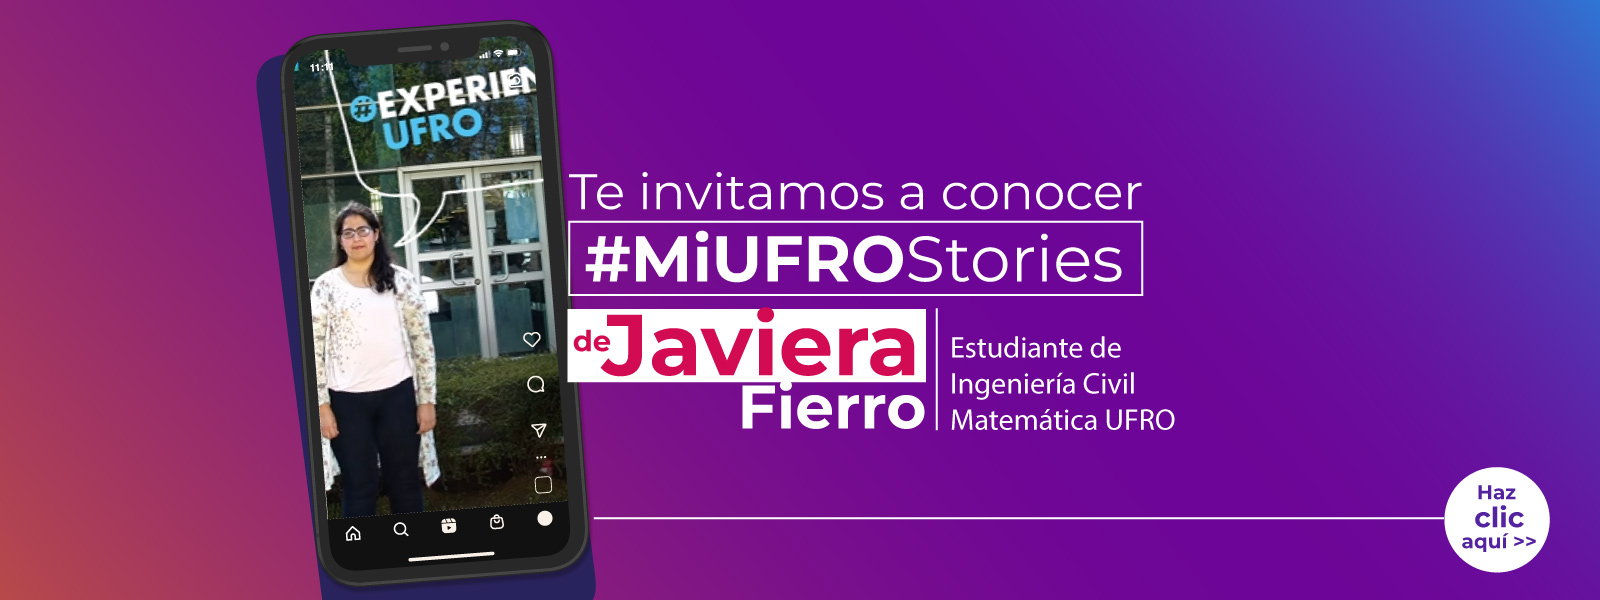 UFRO stories | Javiera Fierro